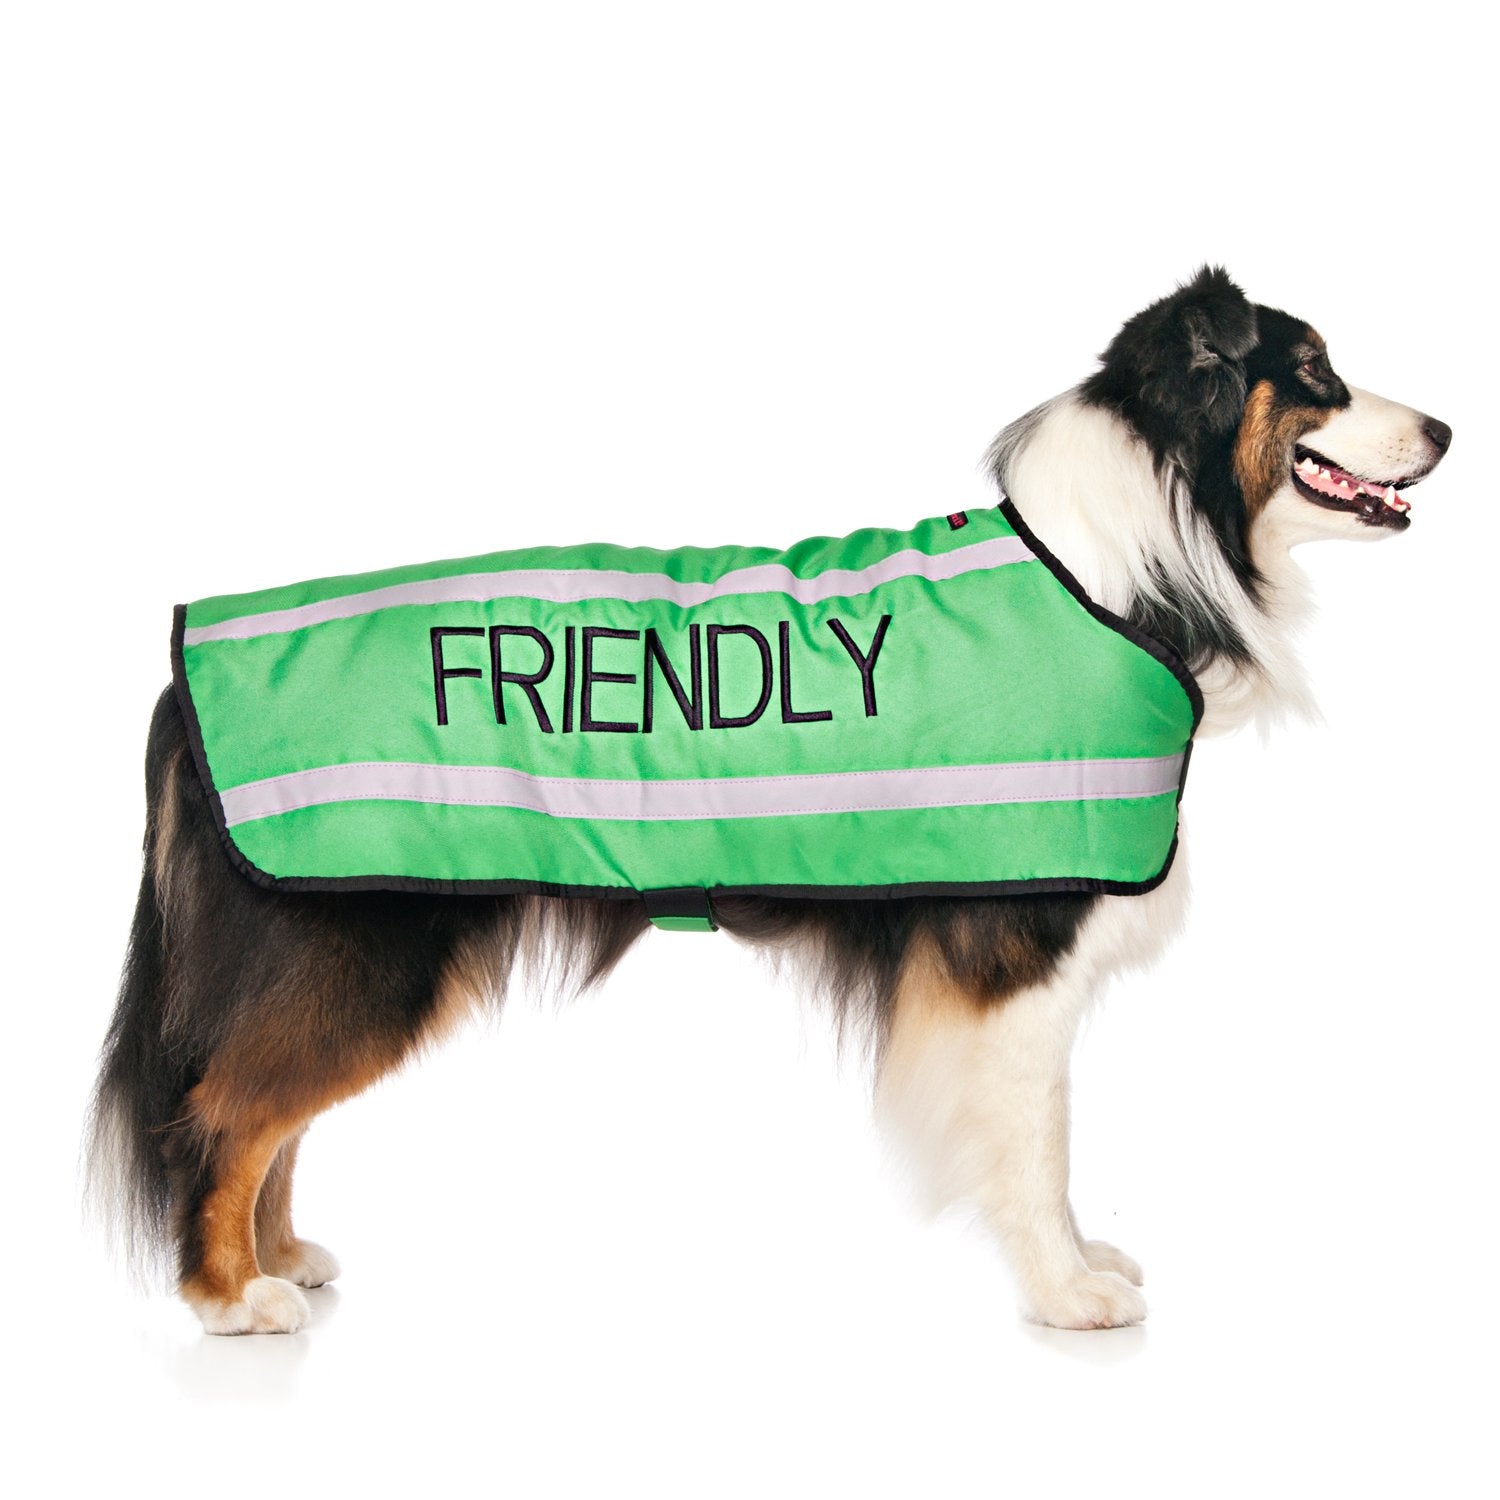 Friendly Dog Collars Green FRIENDLY Large Reflective Coat